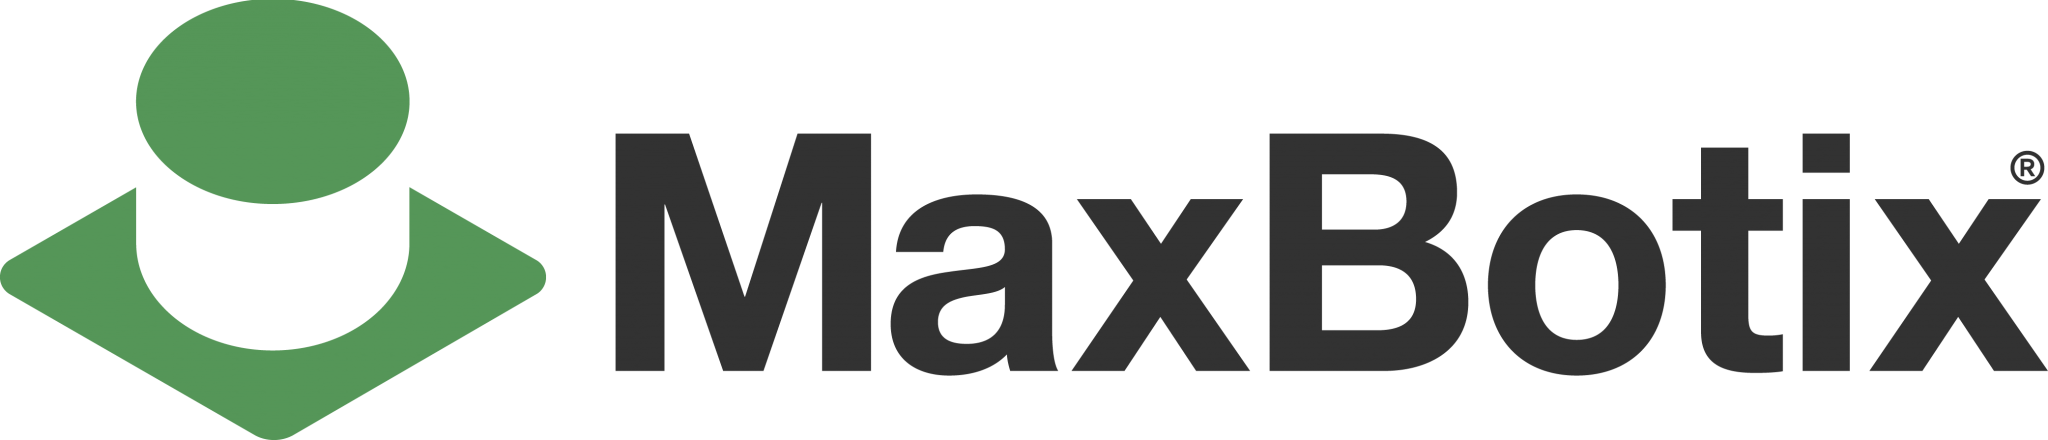 MaxBotix.png